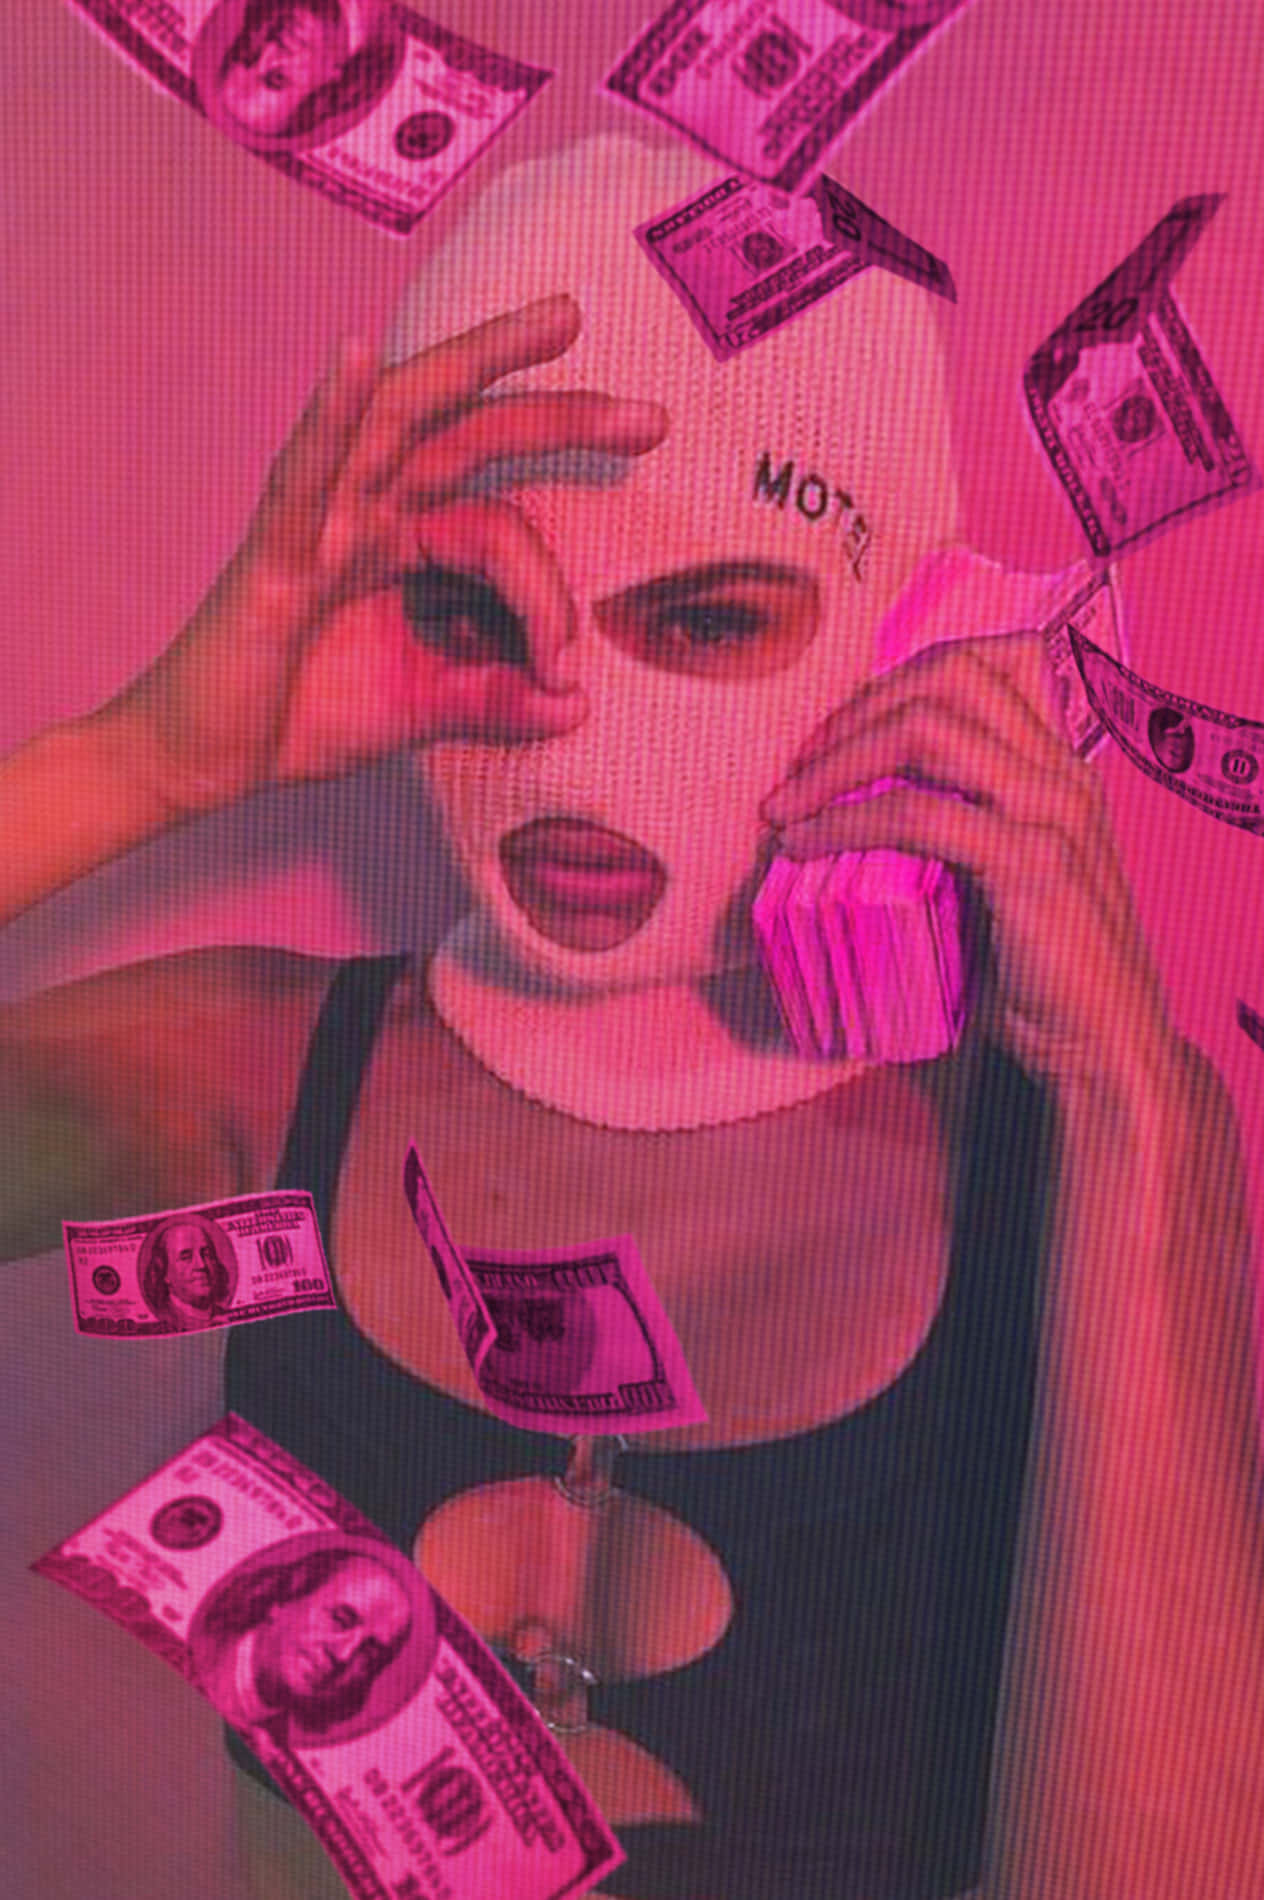 Enkvinna I En Rosa Mask Med Pengar Som Flyger Omkring Henne. Wallpaper